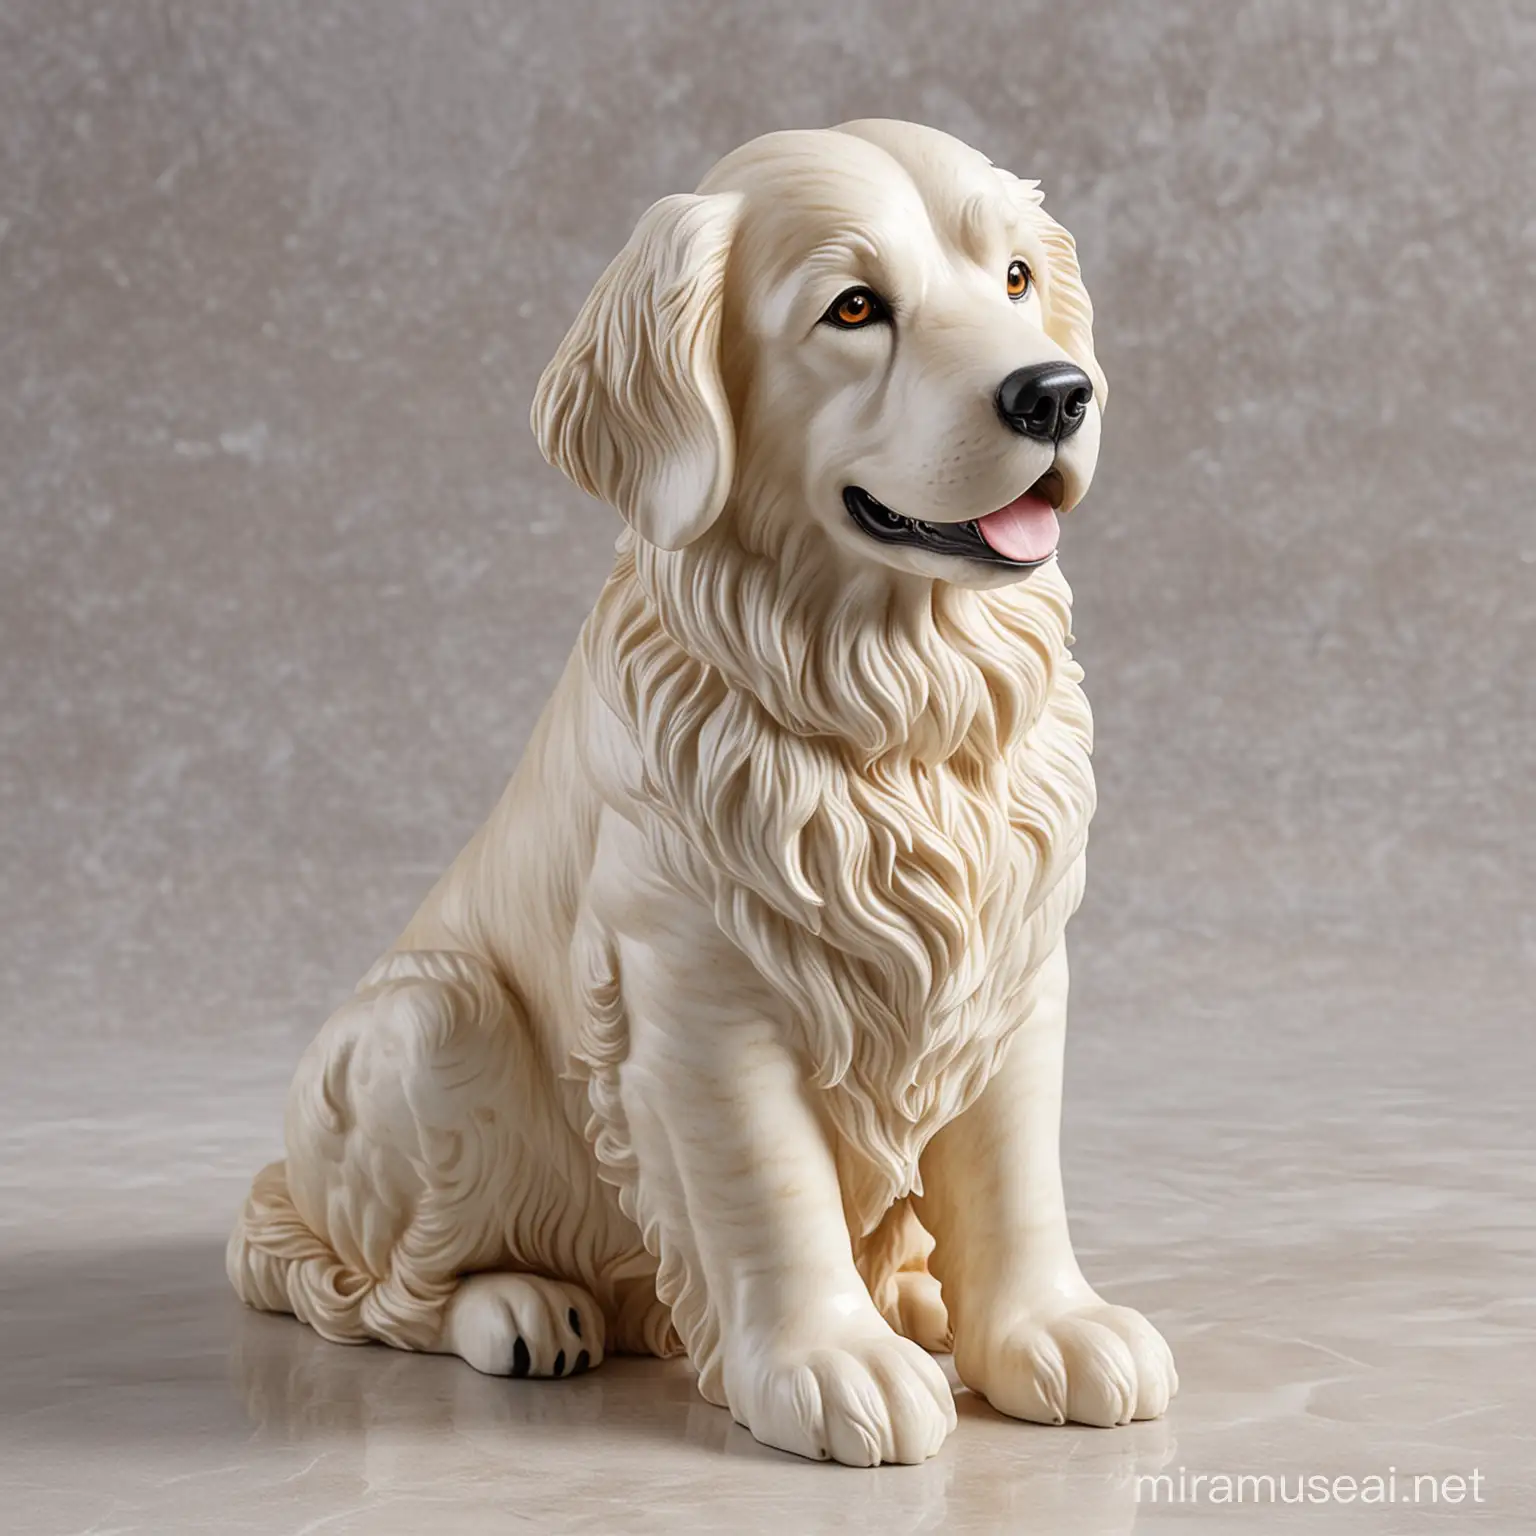 Elegant Golden Retriever Dog Sculpture in Marble